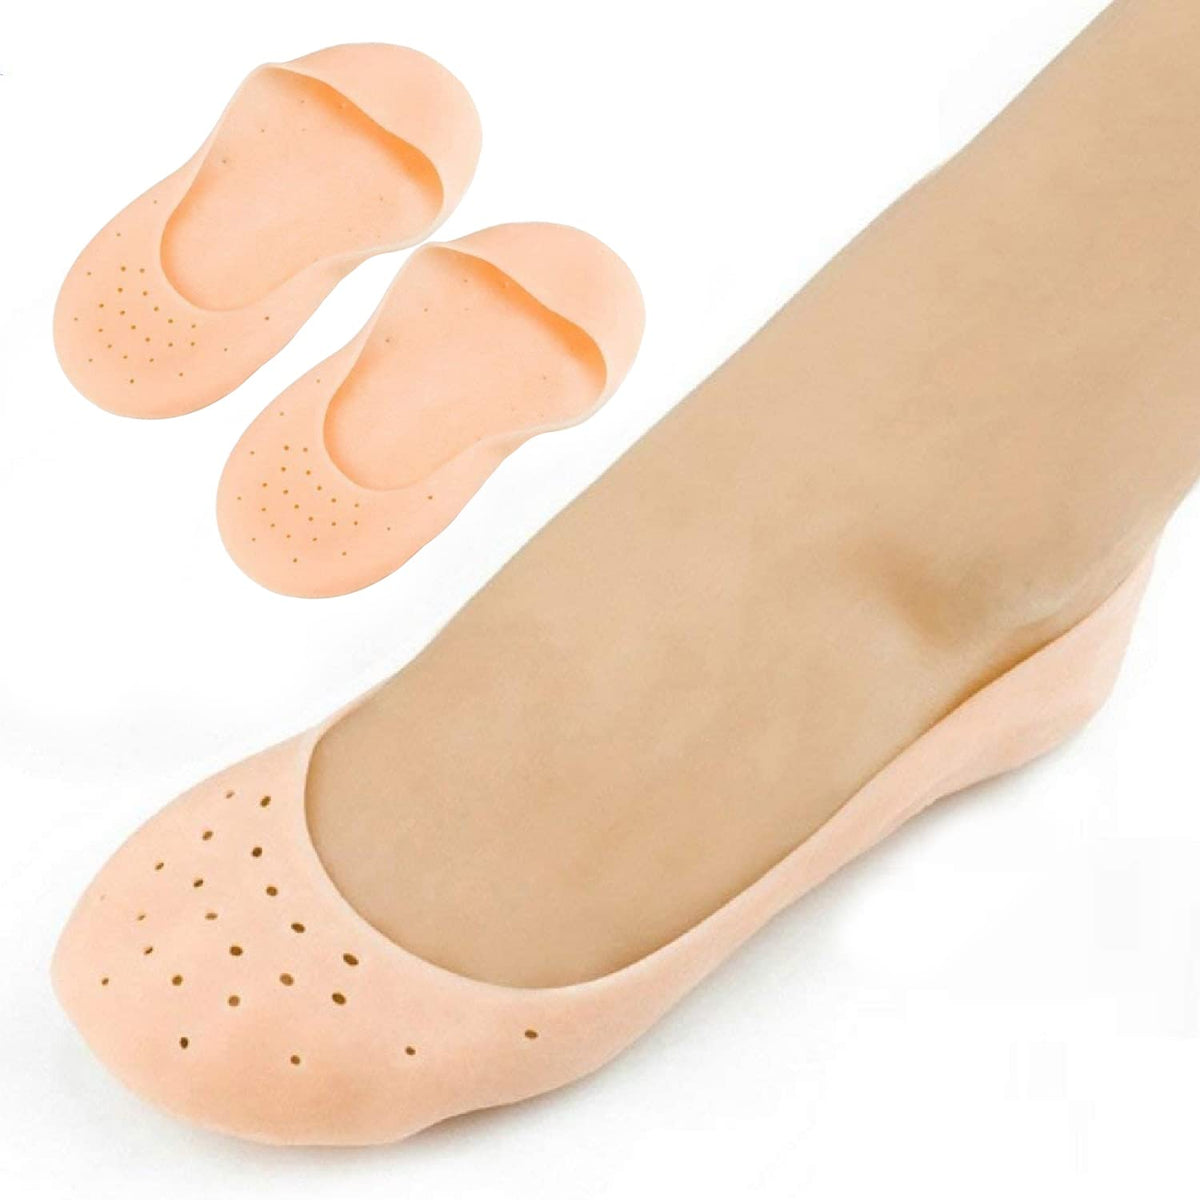 Moisturising socks helps cracked heels and repairs feet | eBay